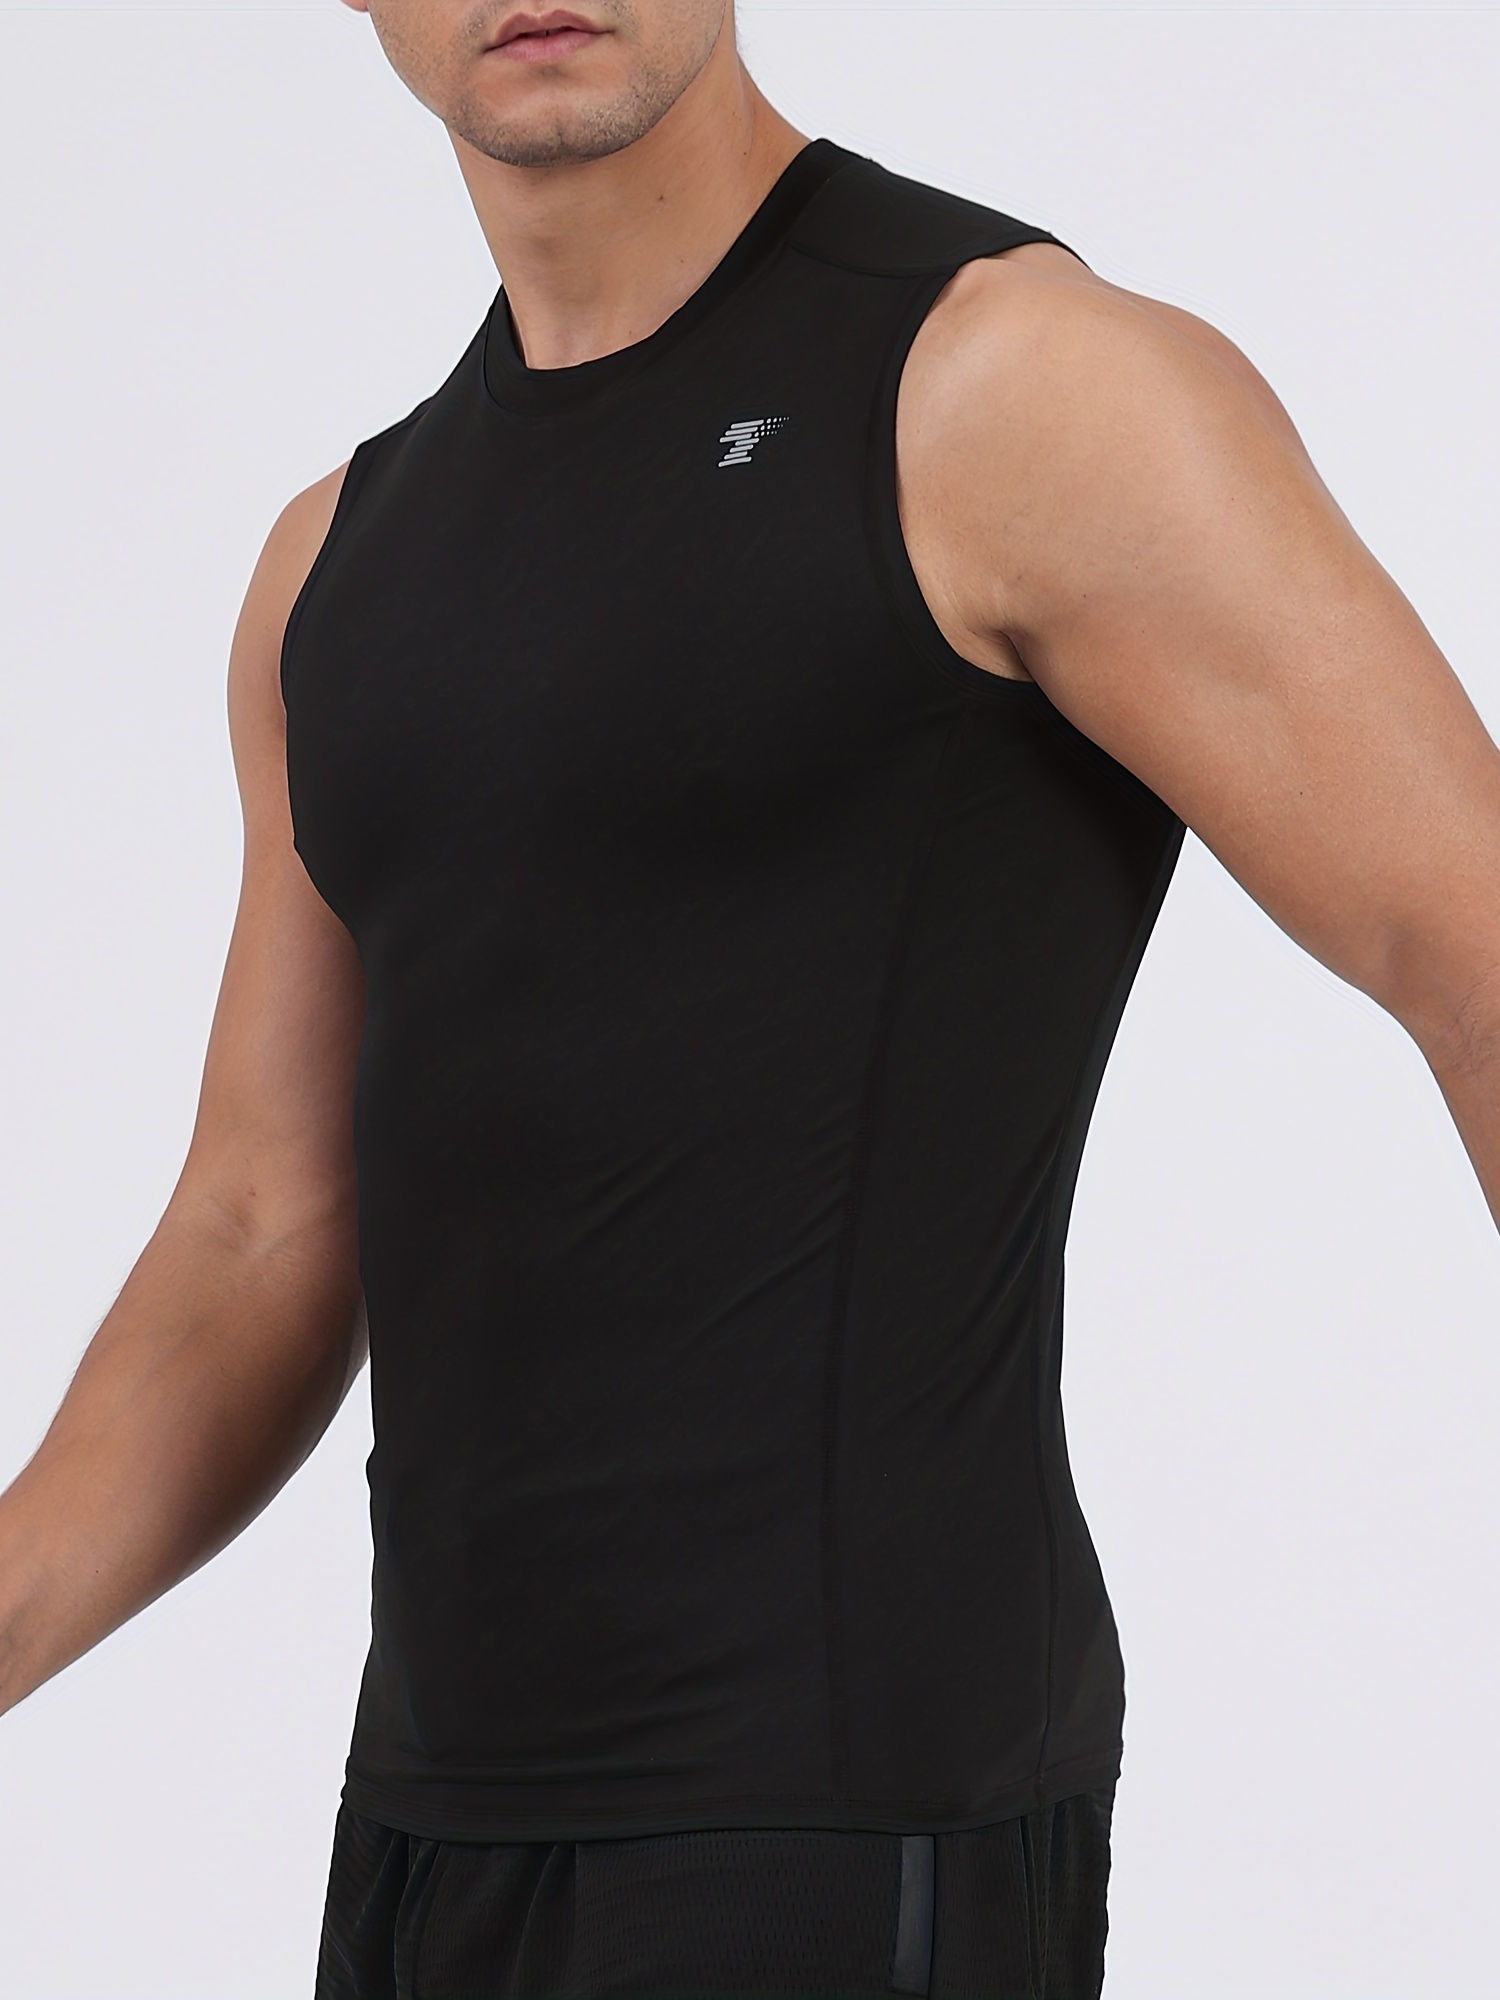 Avamo Mens Compression Shirts Short Sleeve Summer Tops Plain Sport T Shirt  Casual Muscle T-shirt Running Tee White 3XL 